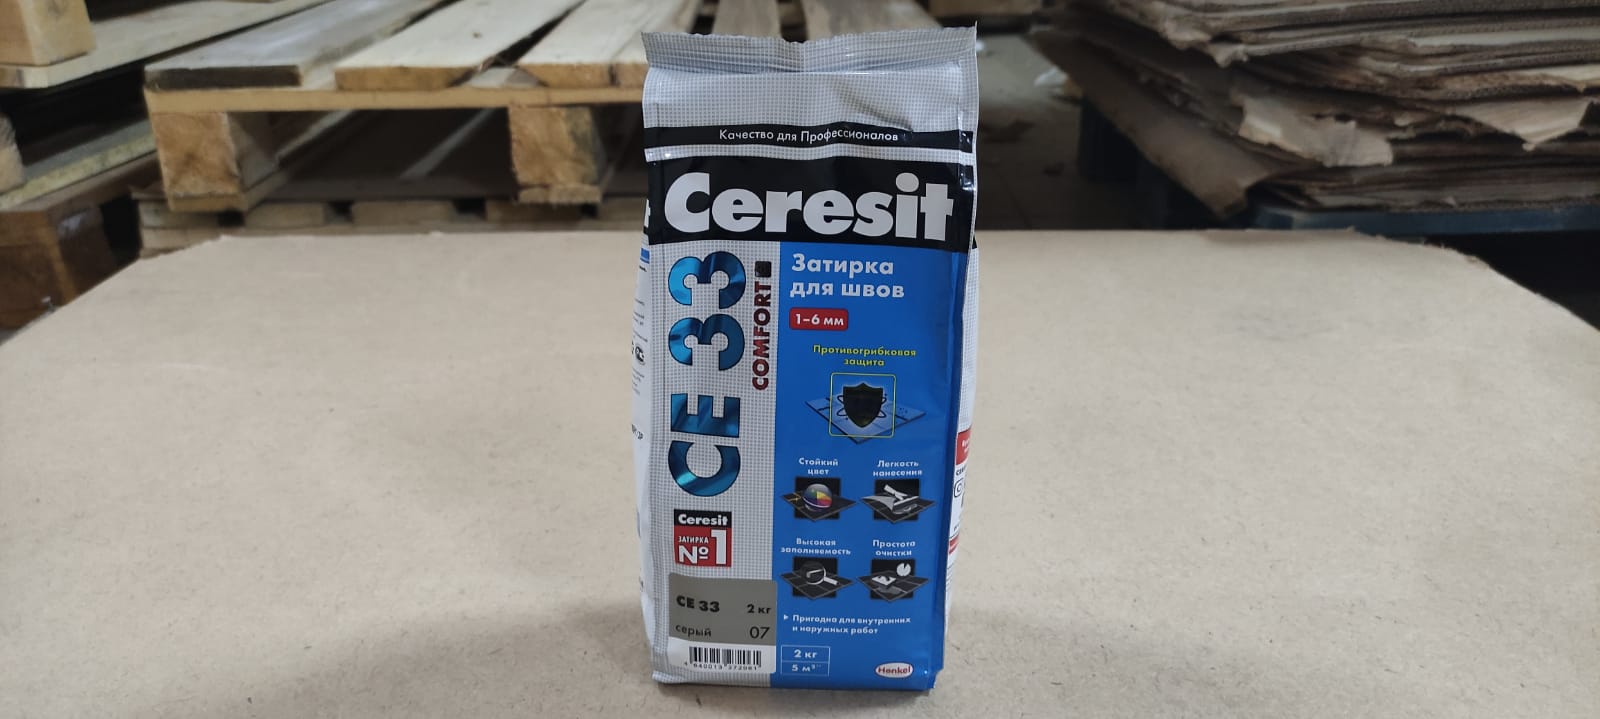 Затирка для швов 1-6 мм Ceresit / Церезит СЕ 33 Comfort 2 кг (цвет: Серый)